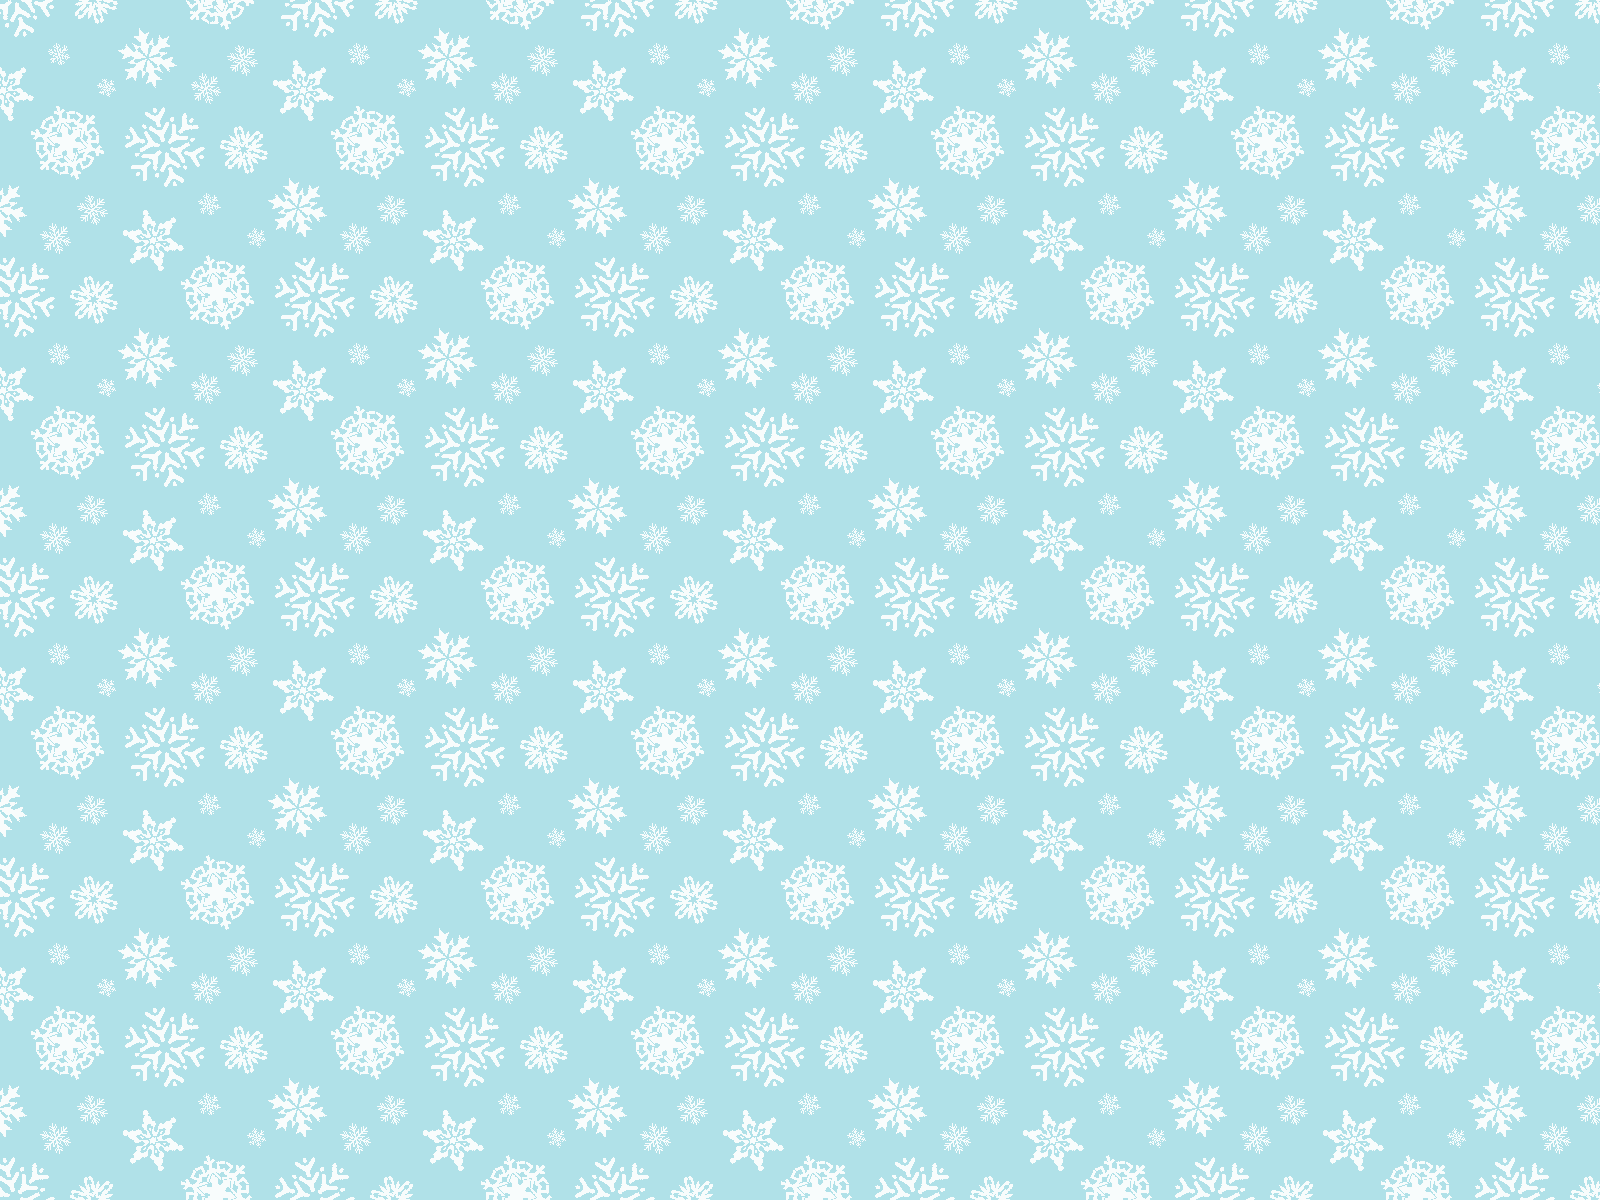 Free Christmas Background, Wallpaper & Photohop Patterns. Free christmas background, Christmas wallpaper background, Blue background patterns